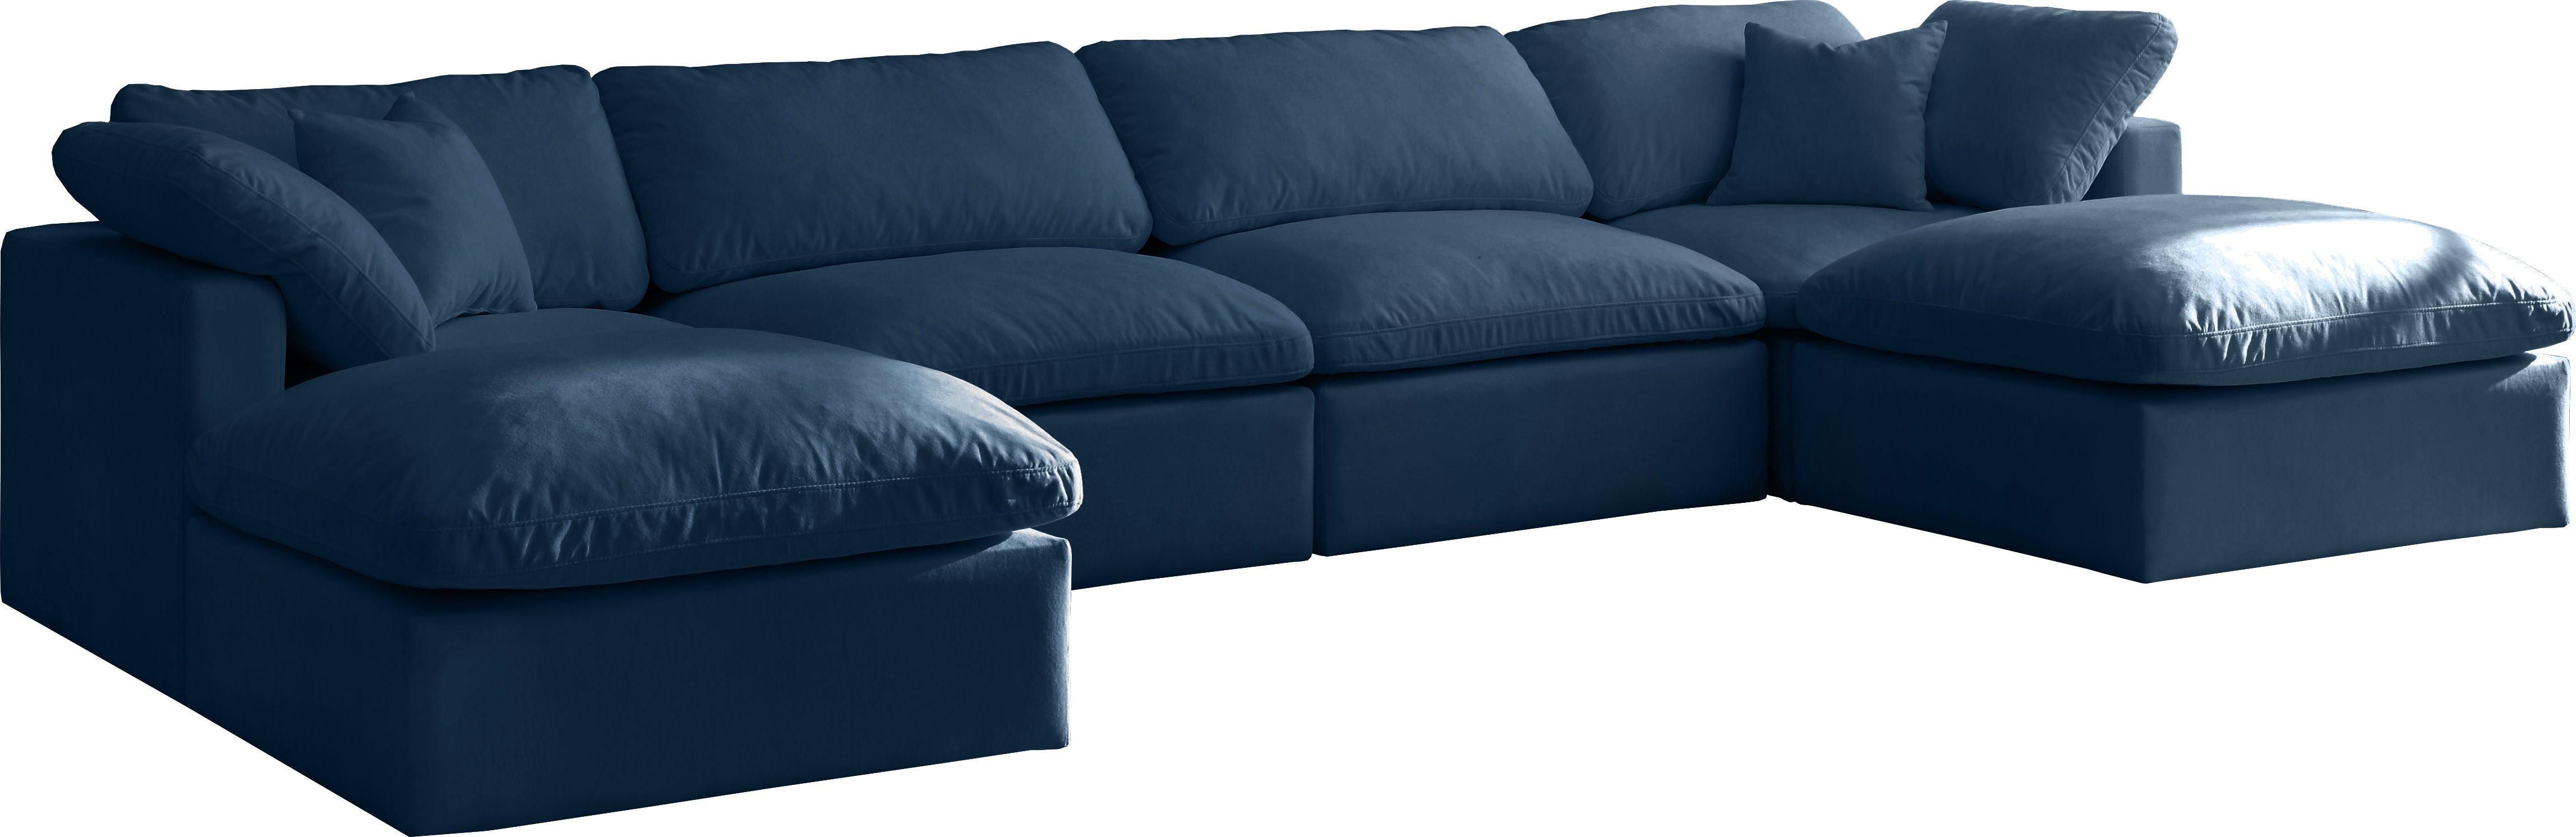 Meridian Furniture - Plush - Velvet Standart Comfort Modular Sectional Standart 6 Piece - Navy - Fabric - Modern & Contemporary - 5th Avenue Furniture